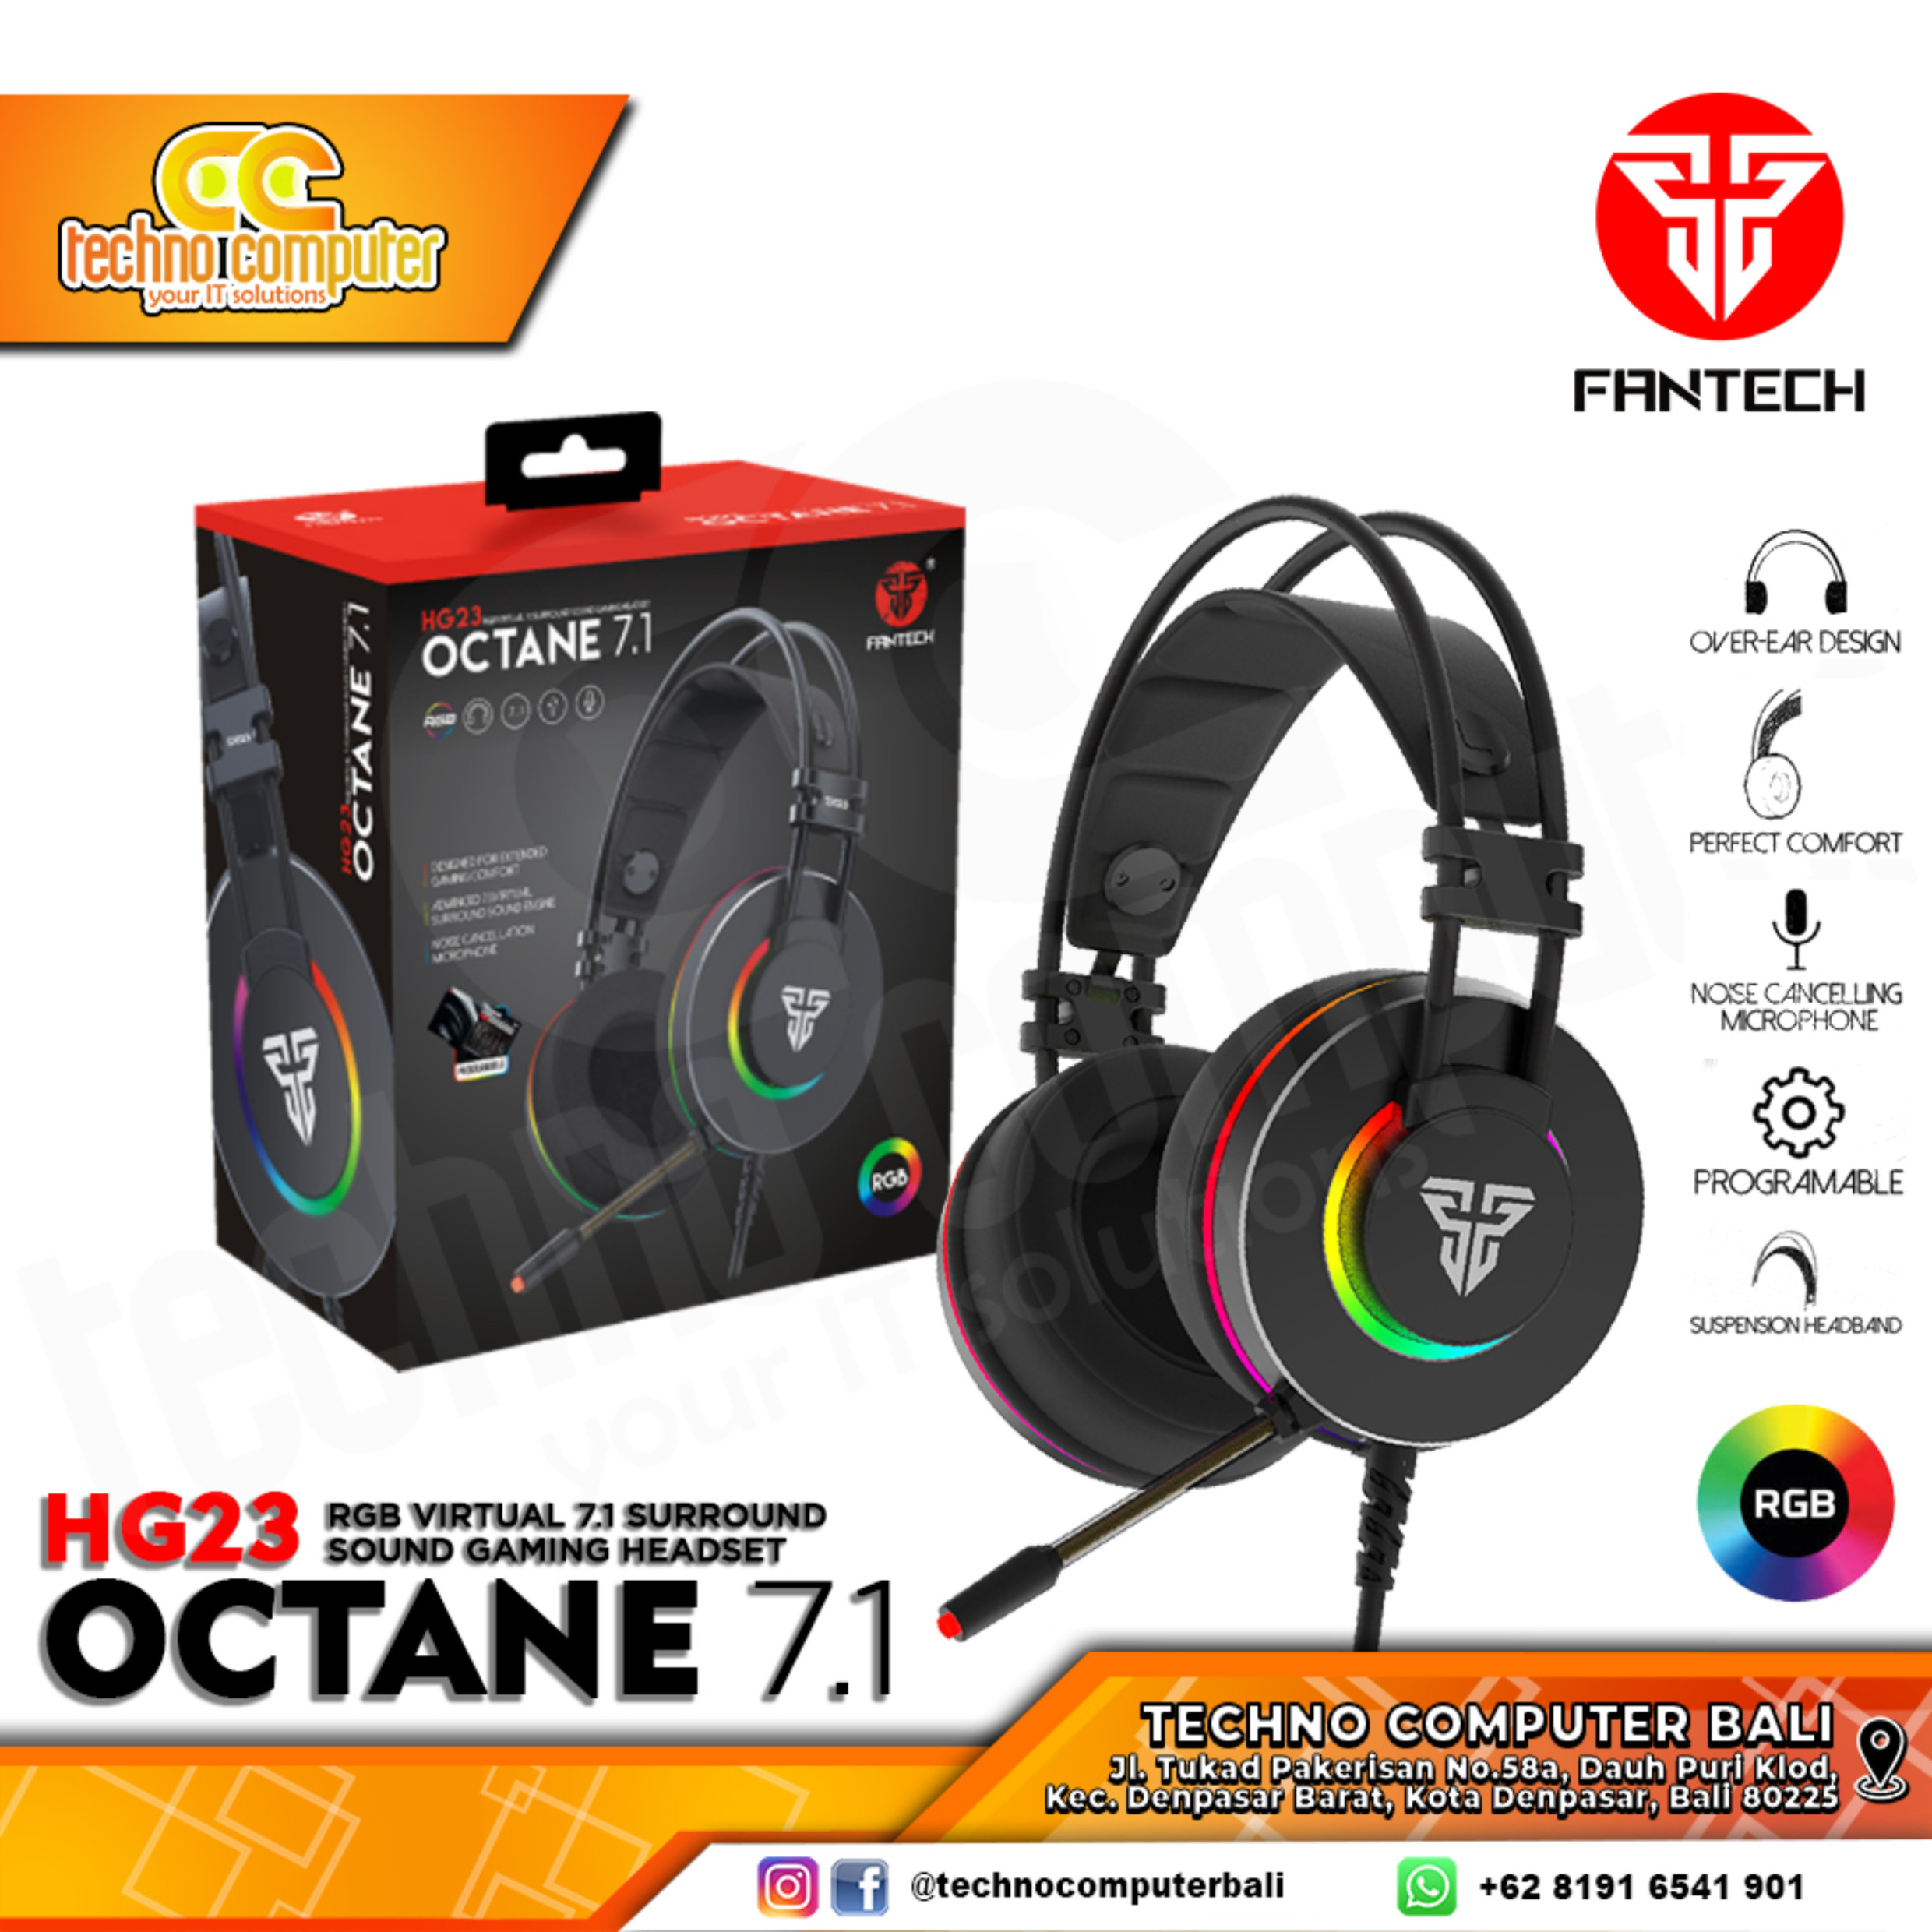 HEADSET FANTECH OCTANE 7.1 HG23 RGB - 7.1 Virtual Surround Sound - Gaming Headset